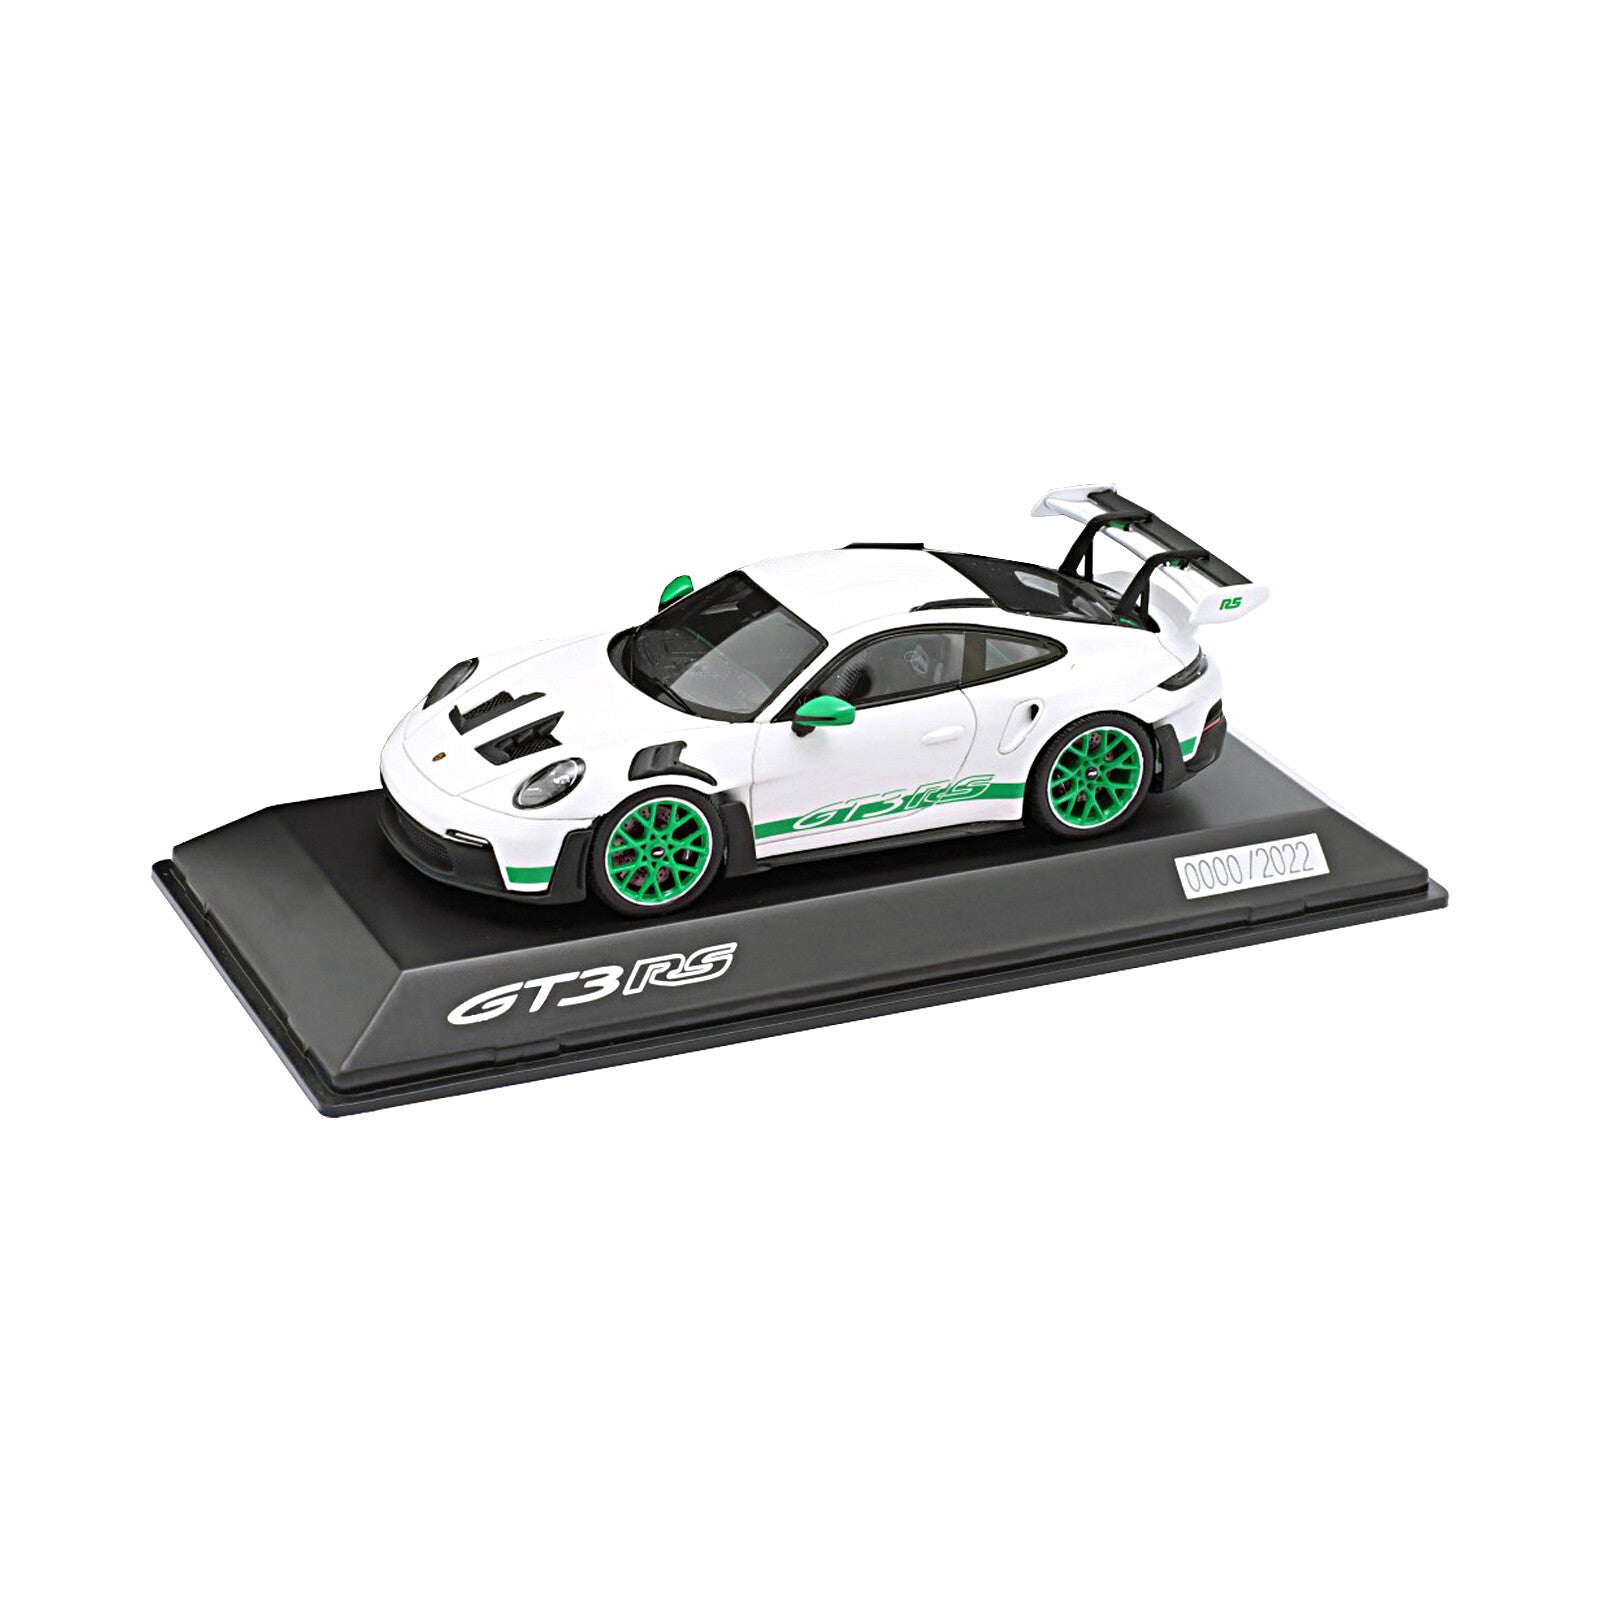 Porsche 911 GT3 RS (992) Model Car 1:43 Scale - White / Python